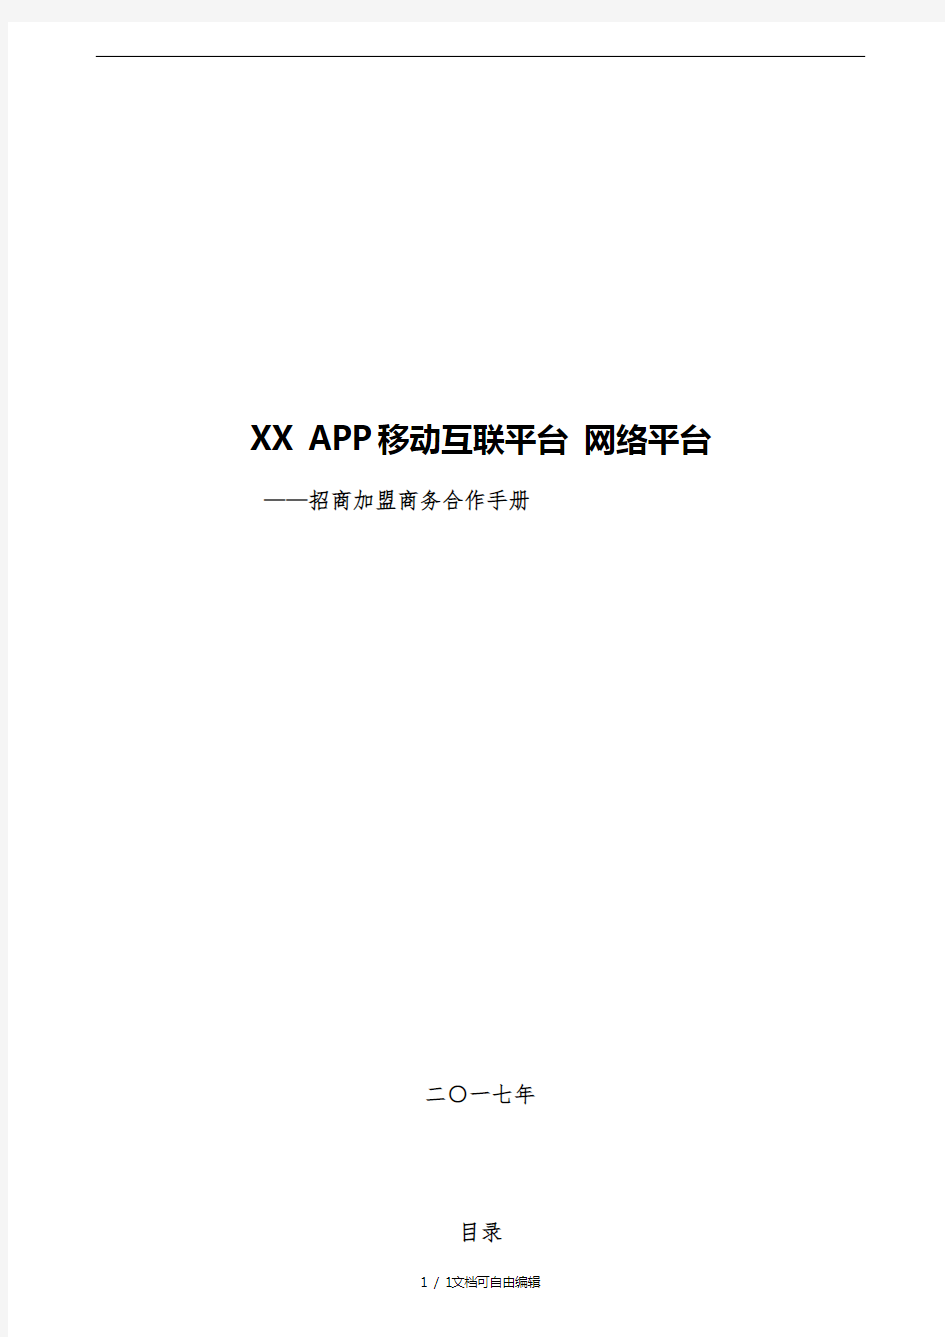 XXAPP电商网络平台招商手册